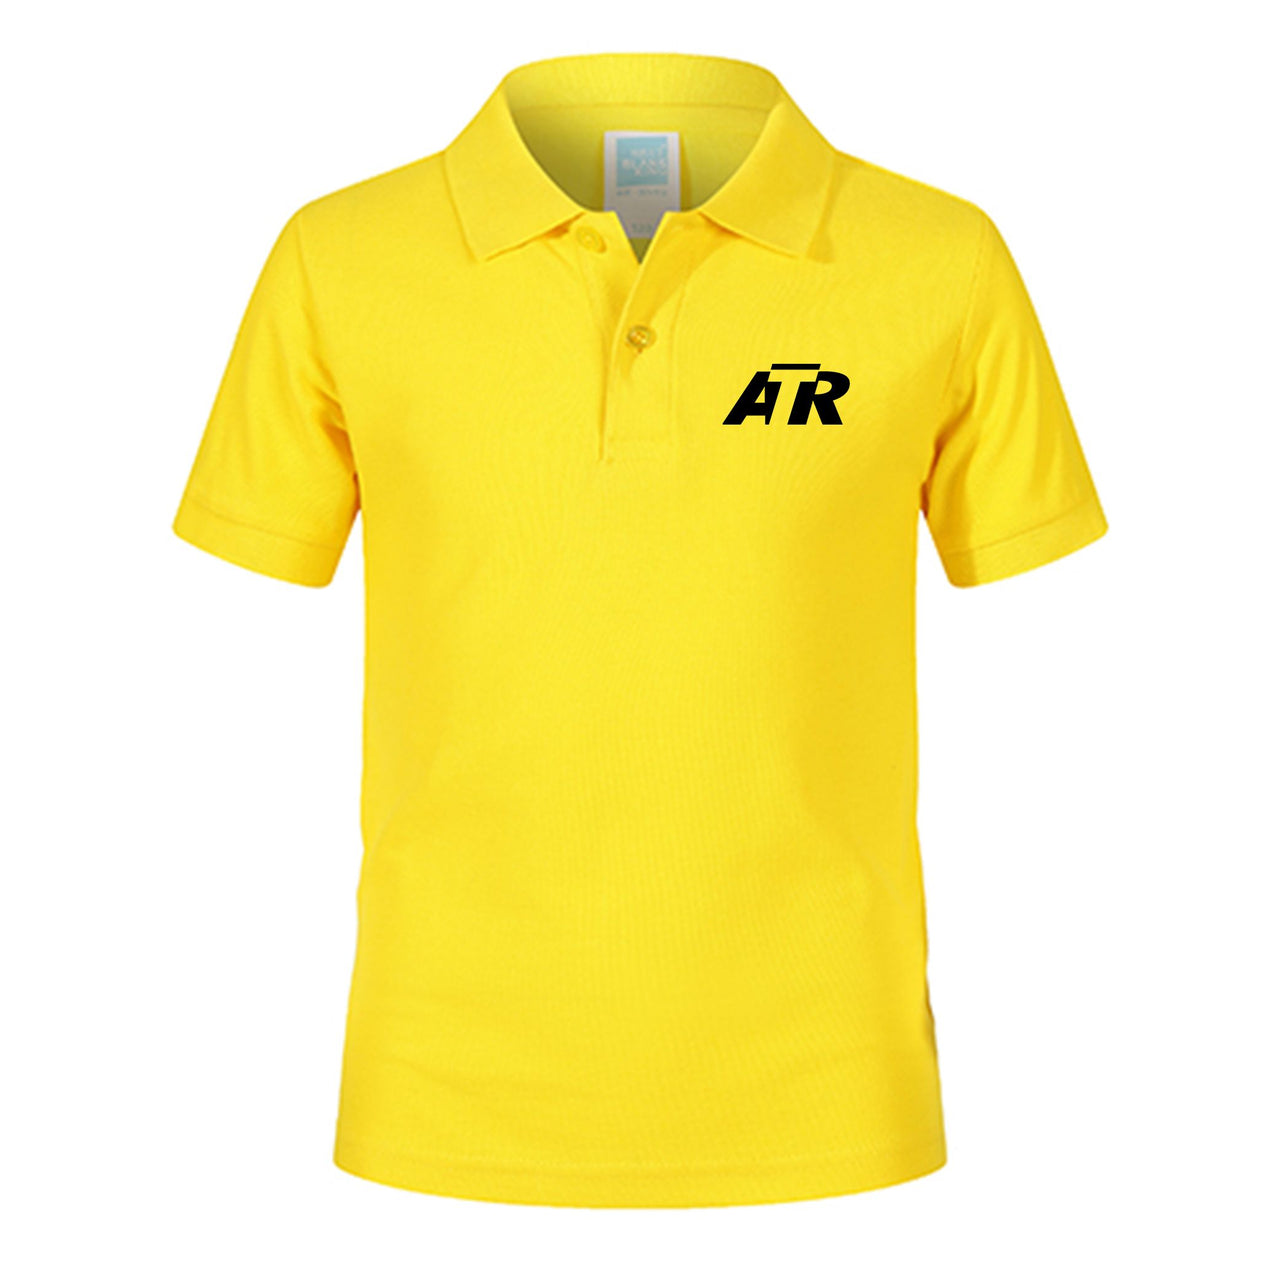 ATR & Text Designed Children Polo T-Shirts